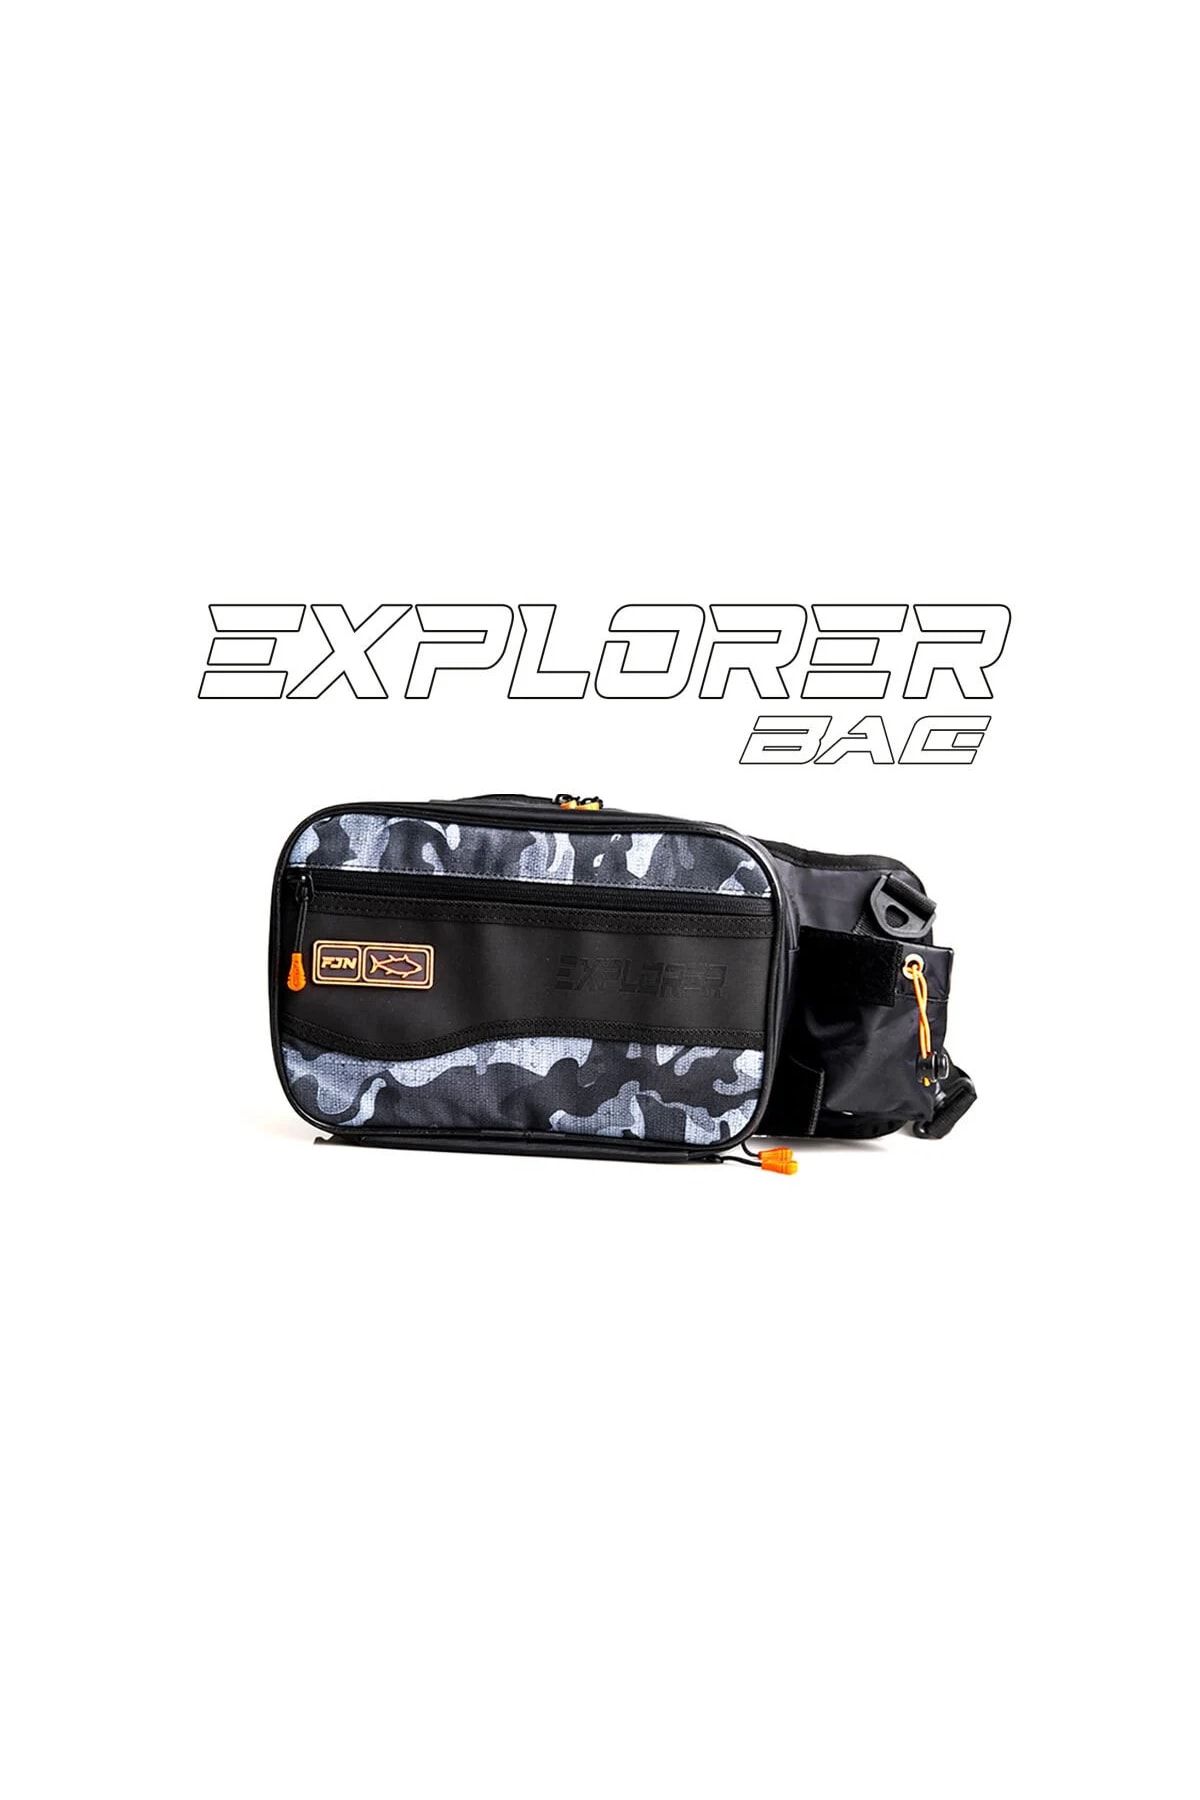 Fujin Explorer Bag Spin & Lrf Çantası